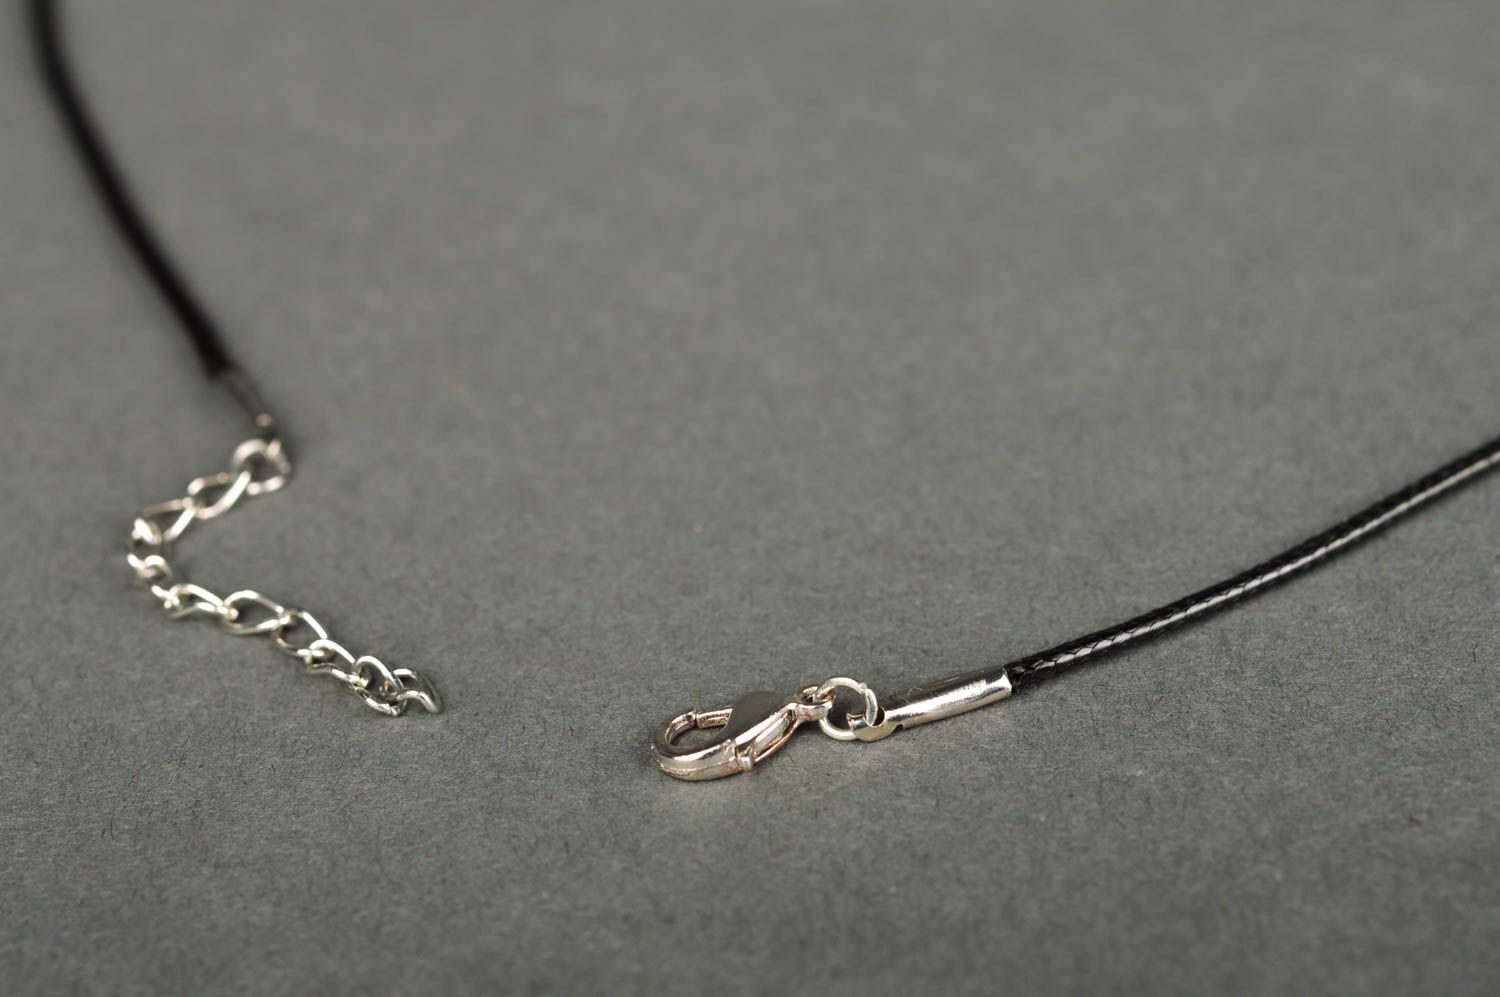 Handmade pendant metal pendant with cameo pendant made of metal metal bijouterie photo 5